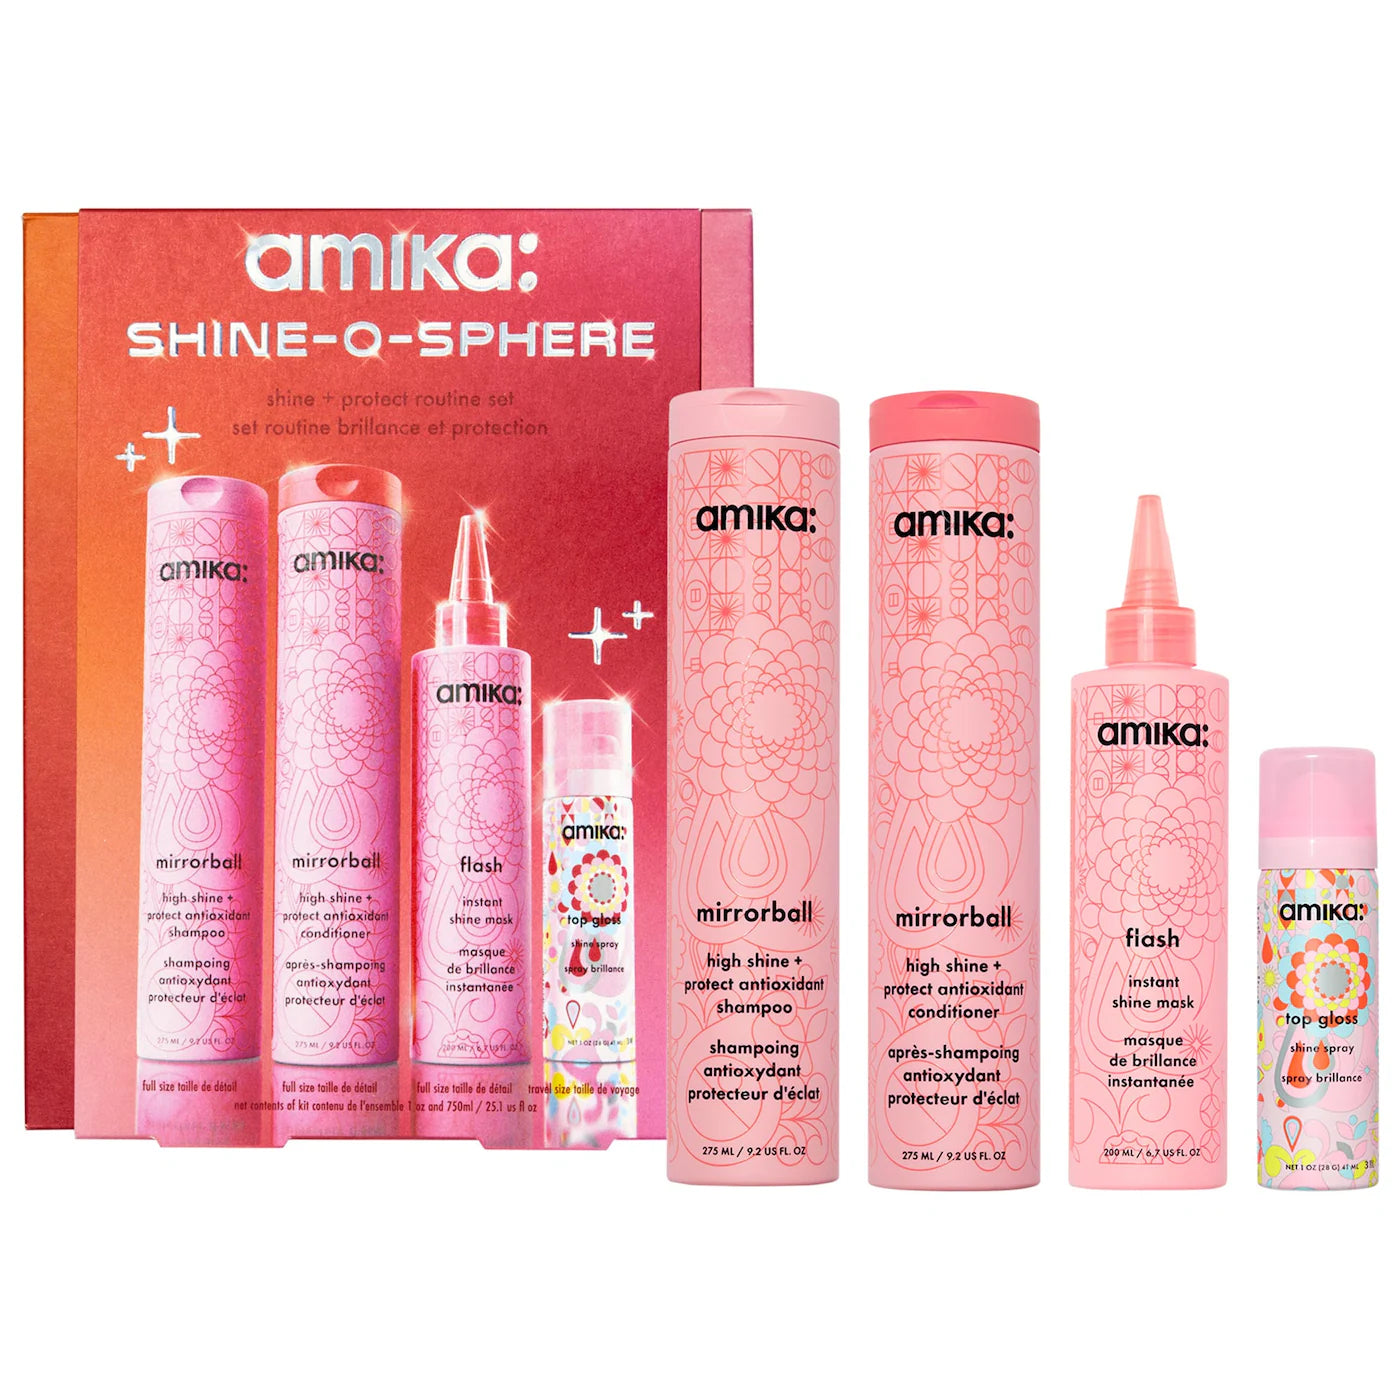 amika - Shine-O-Sphere Shine & Protect Hair Routine Set